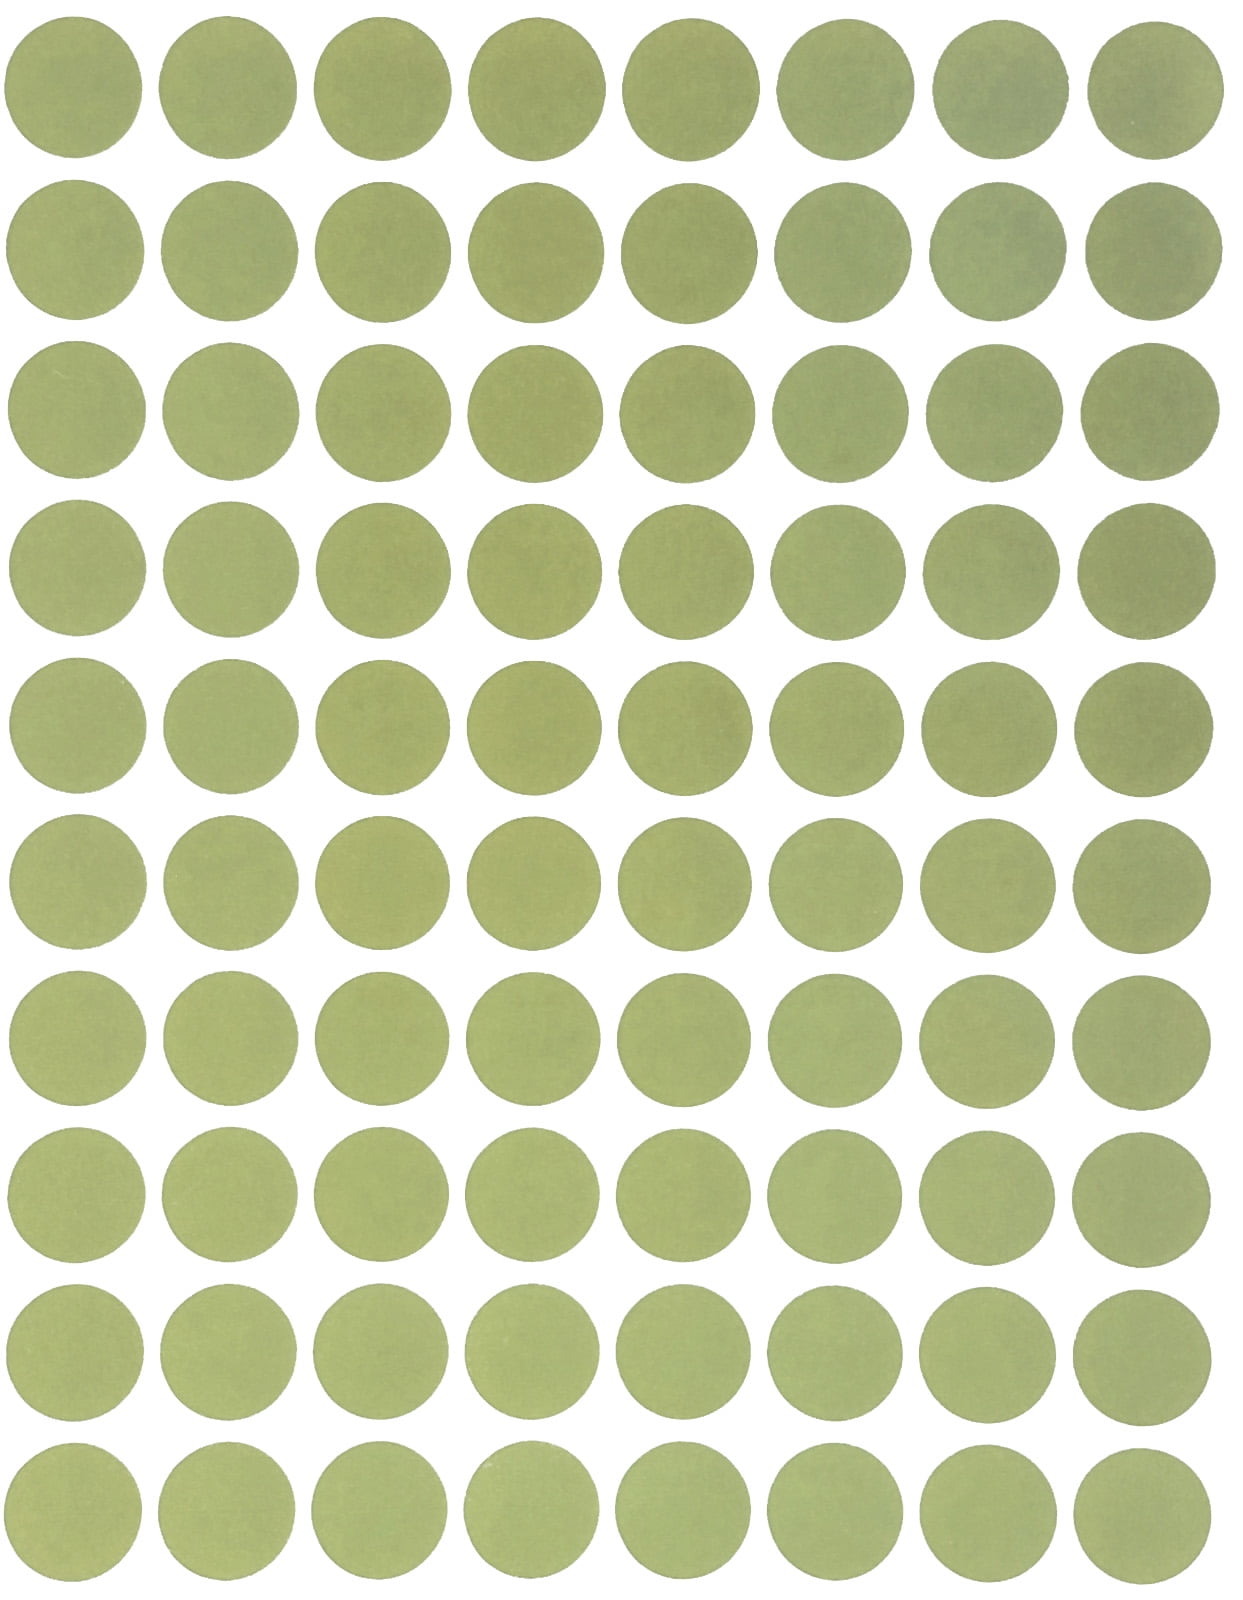 Dot stickers 3/8 inch Metallic colors 10mm – Royal Green Market